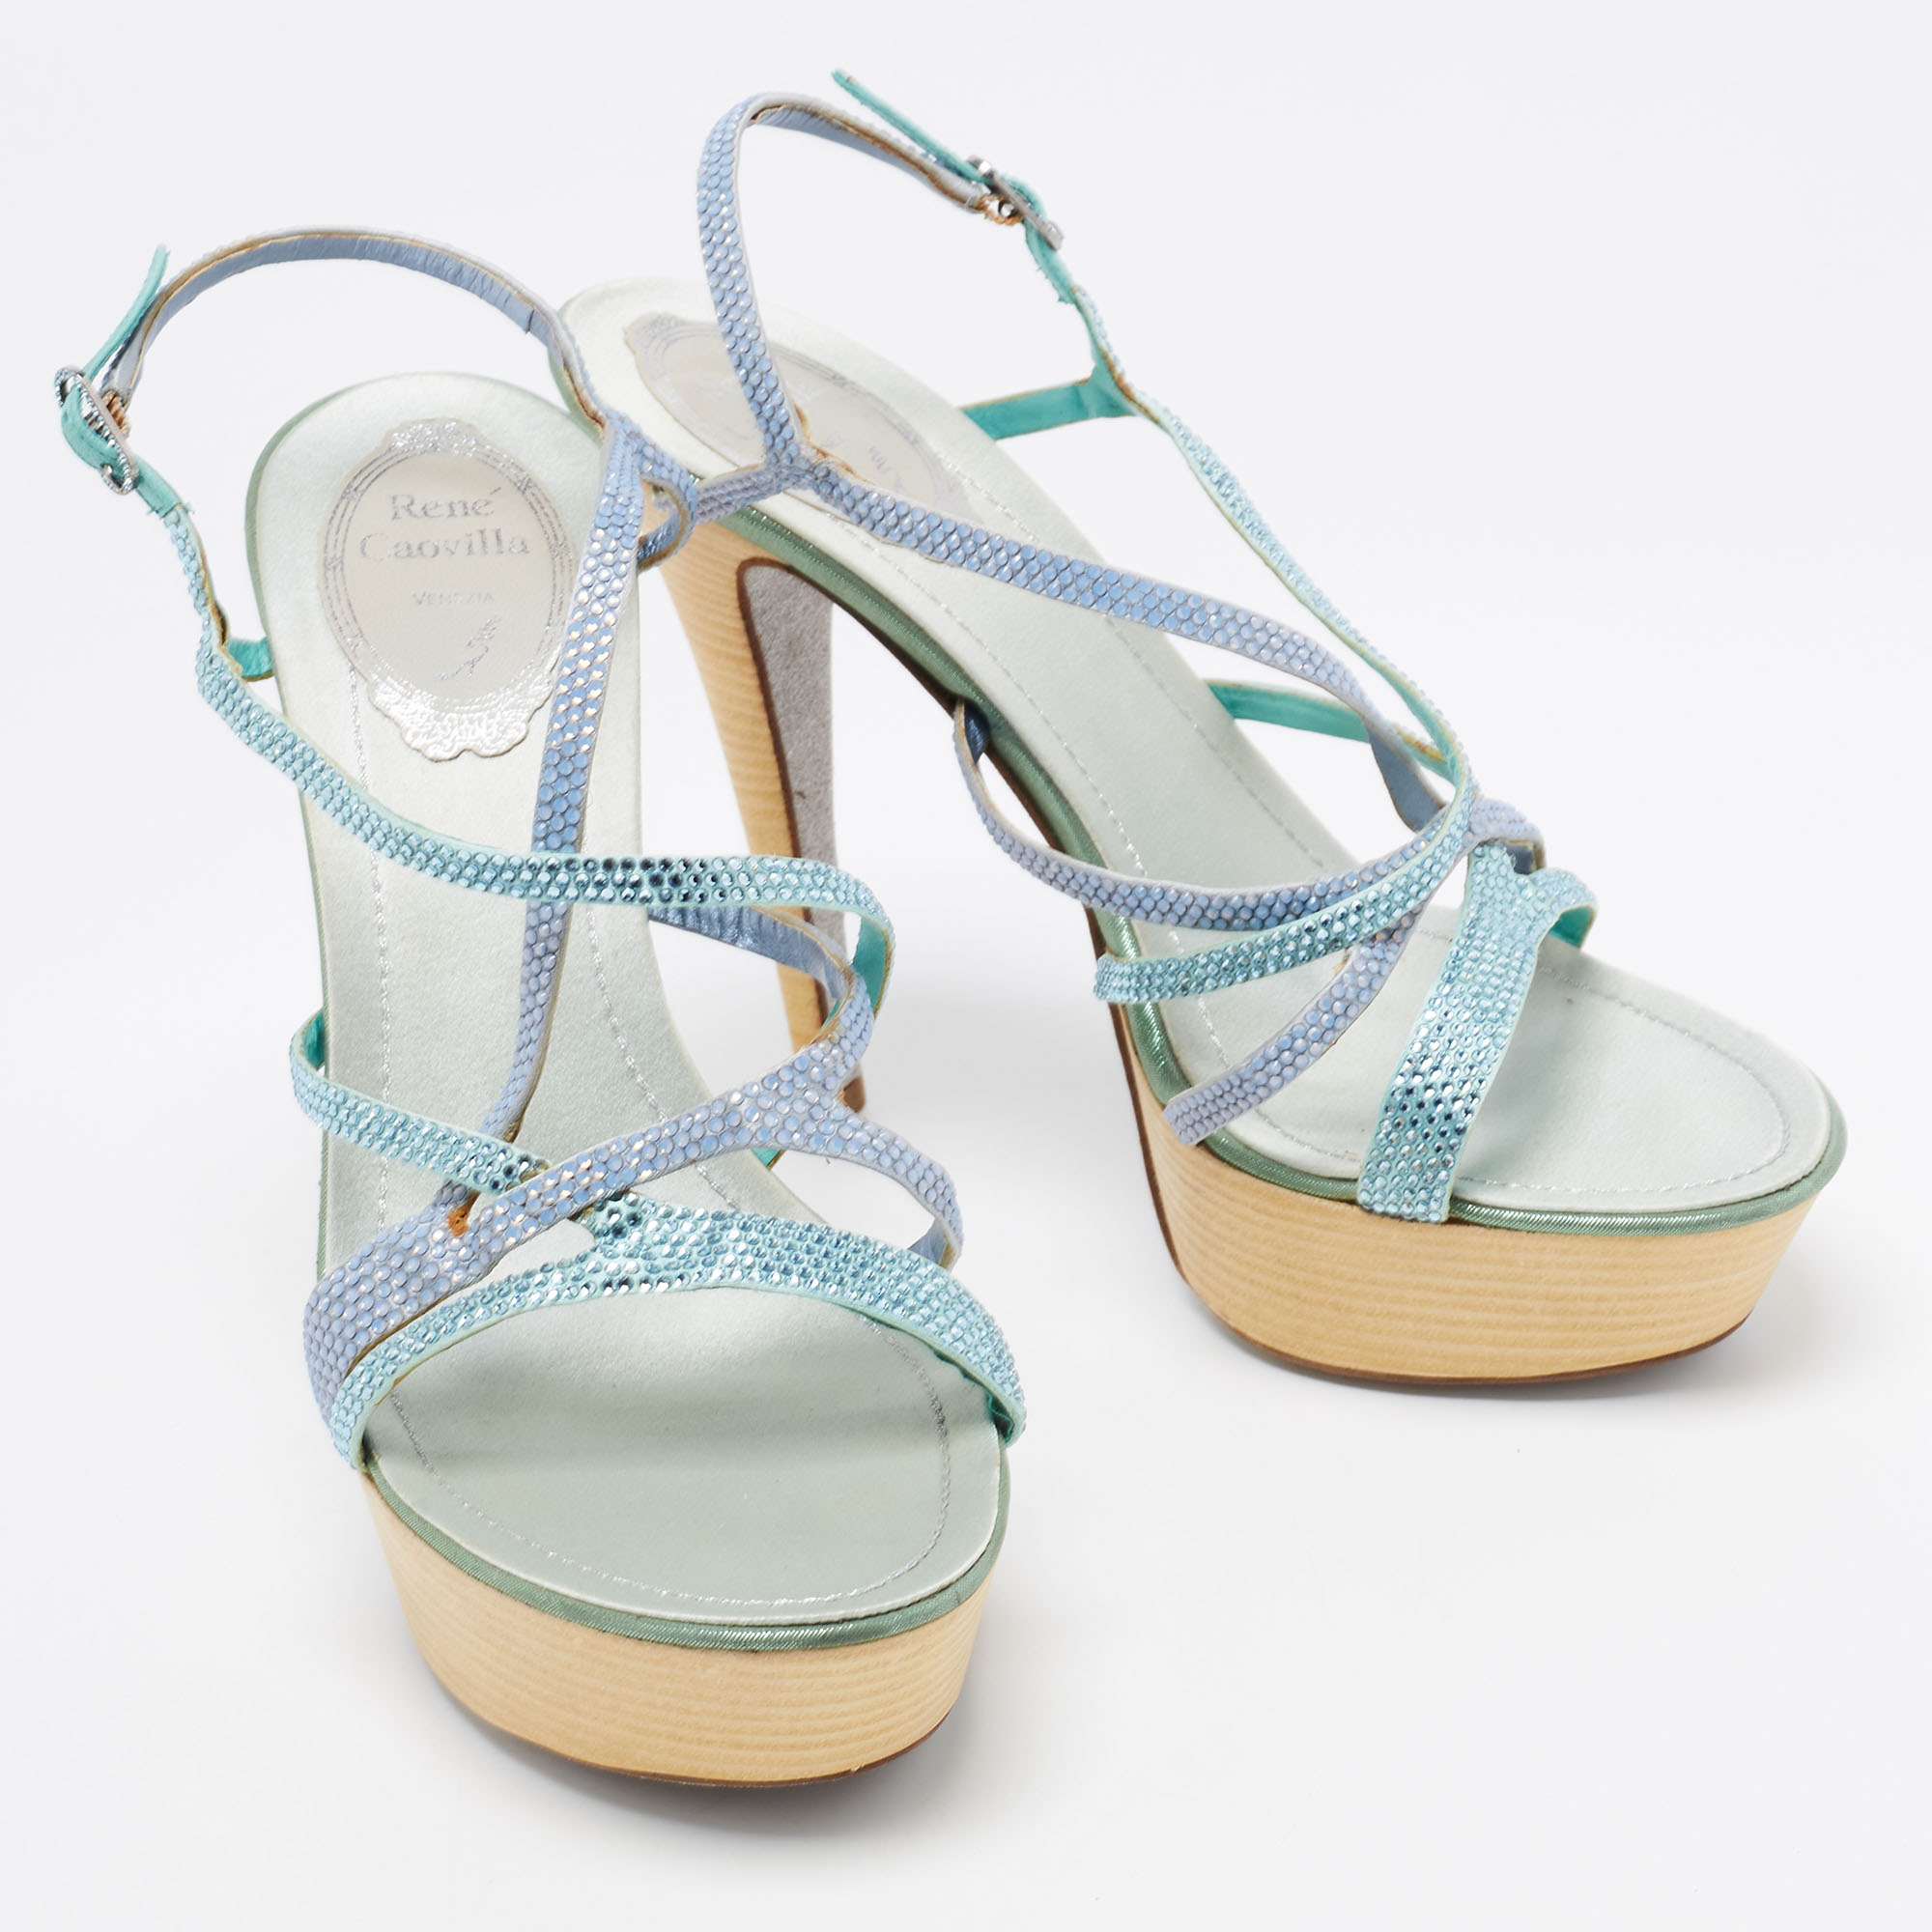 René Caovilla Two Tone Crystal Embellished Satin Ankle-Strap Platform Sandals Size 37.5